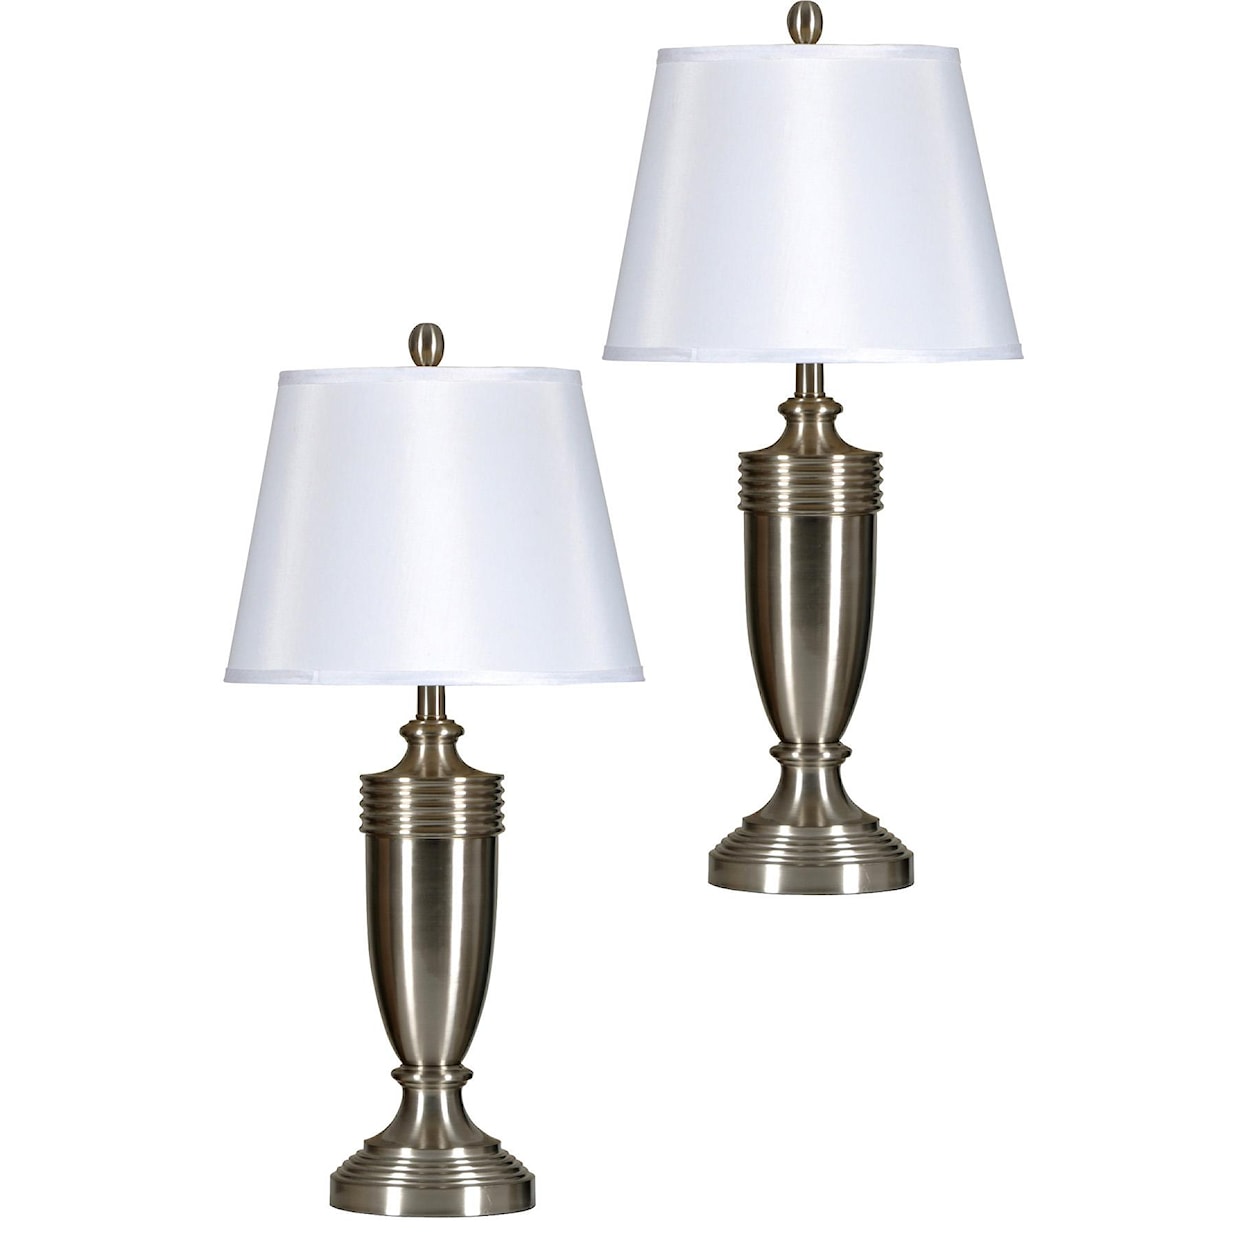 StyleCraft Lamps Lamp Set